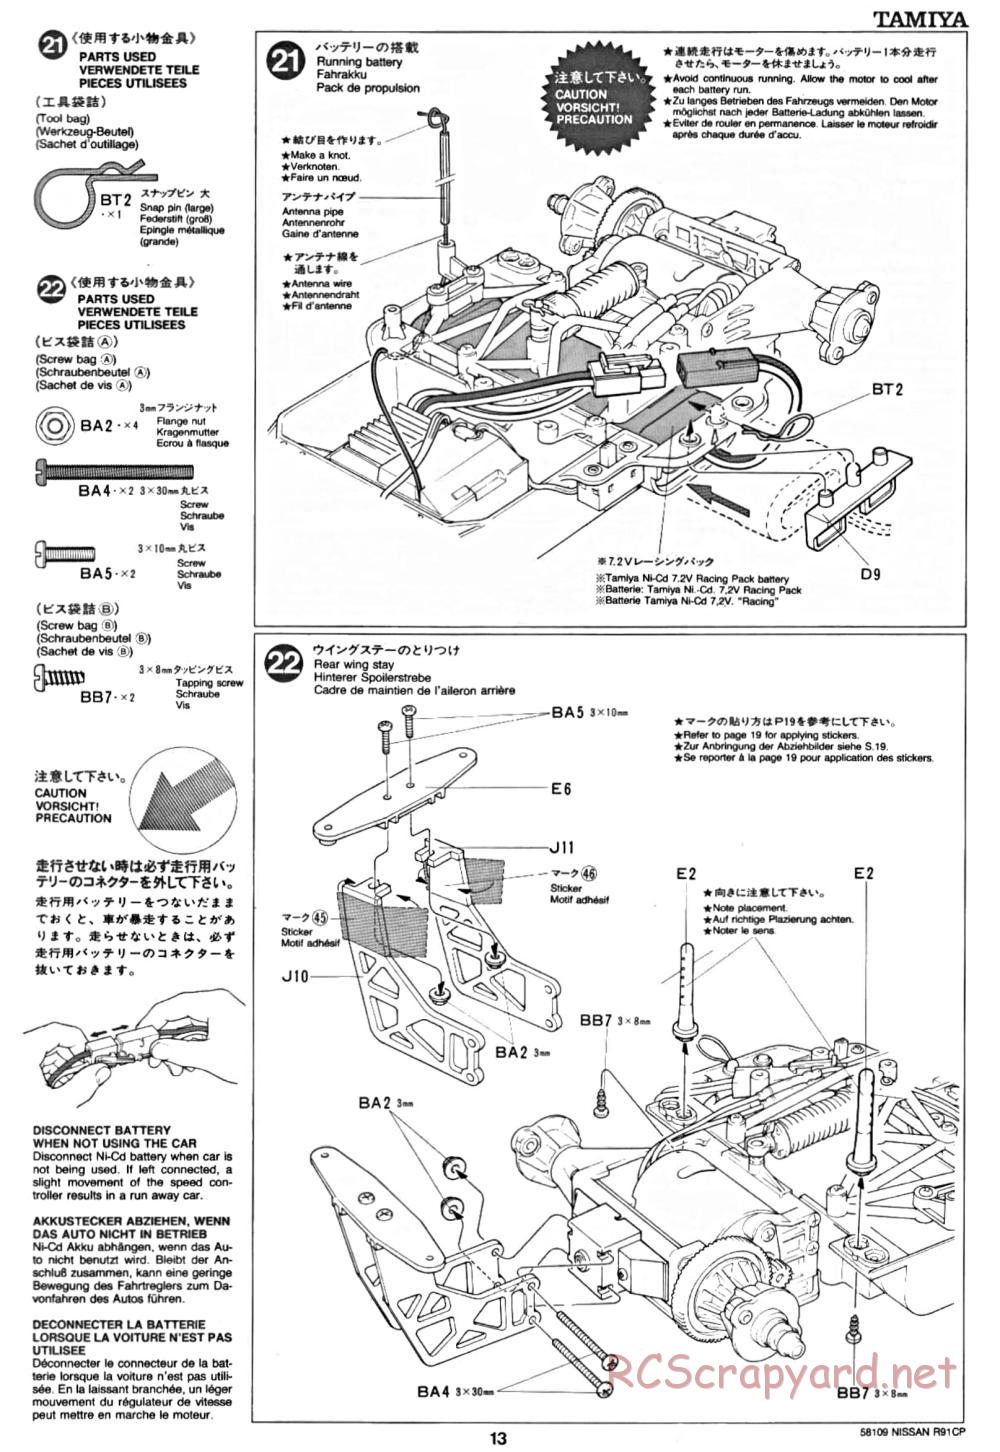 Tamiya - Nissan R91CP - Group-C Chassis - Manual - Page 13